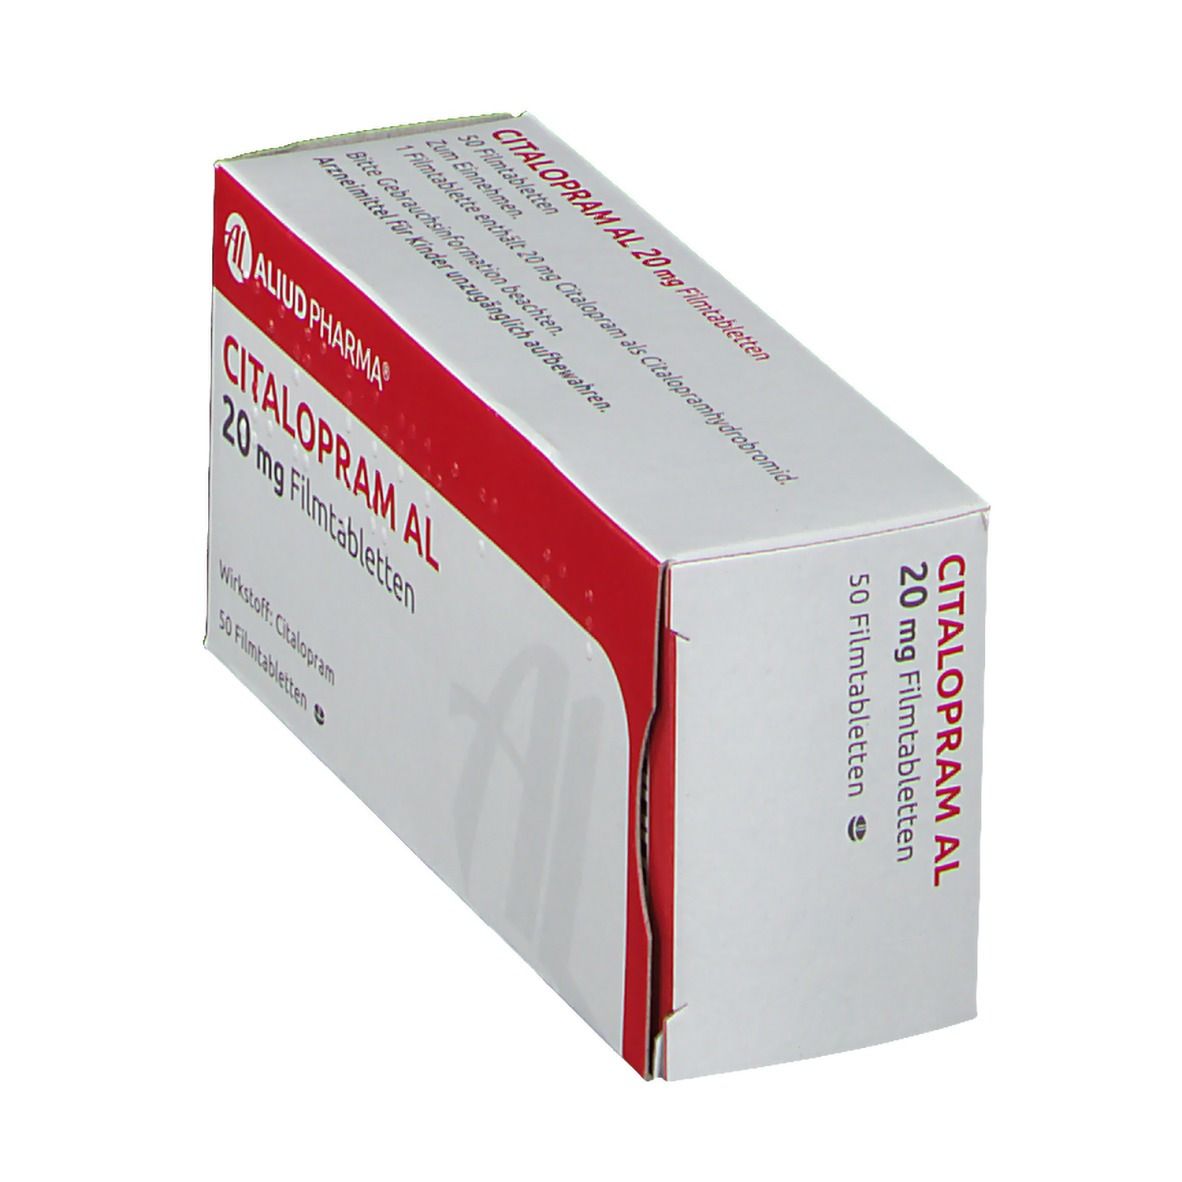 Citalopram AL 20 mg